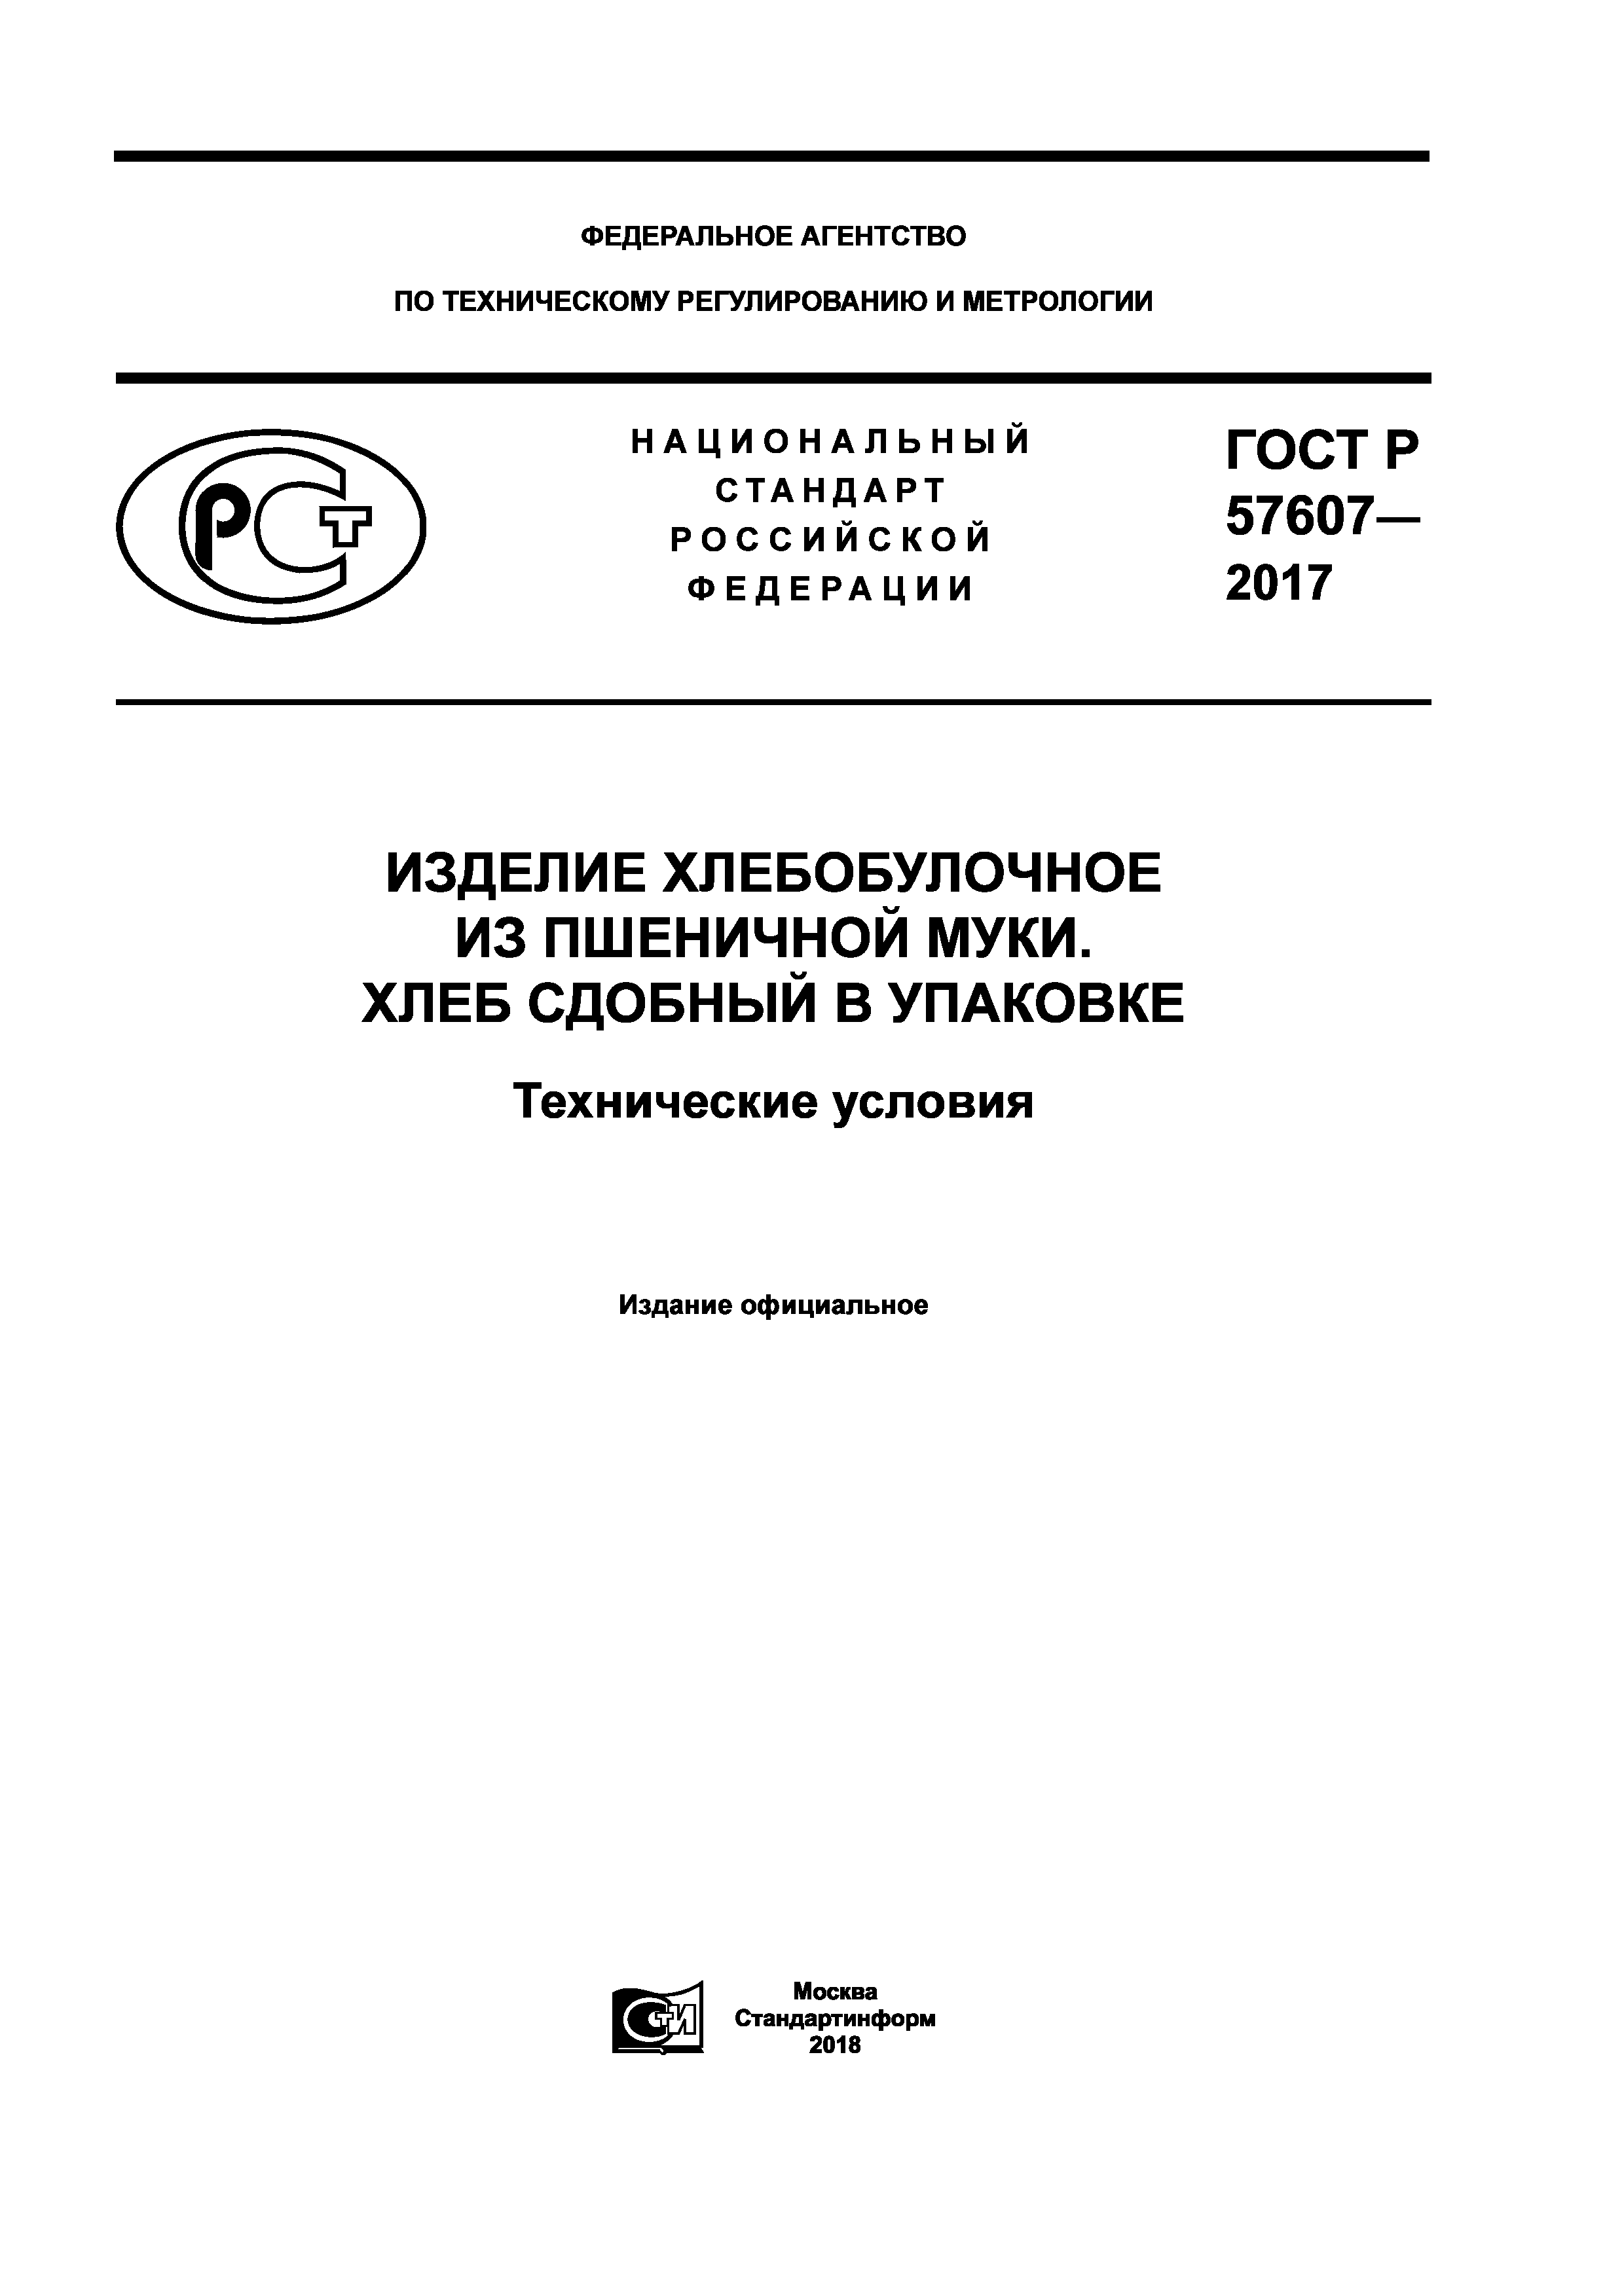 ГОСТ Р 57607-2017